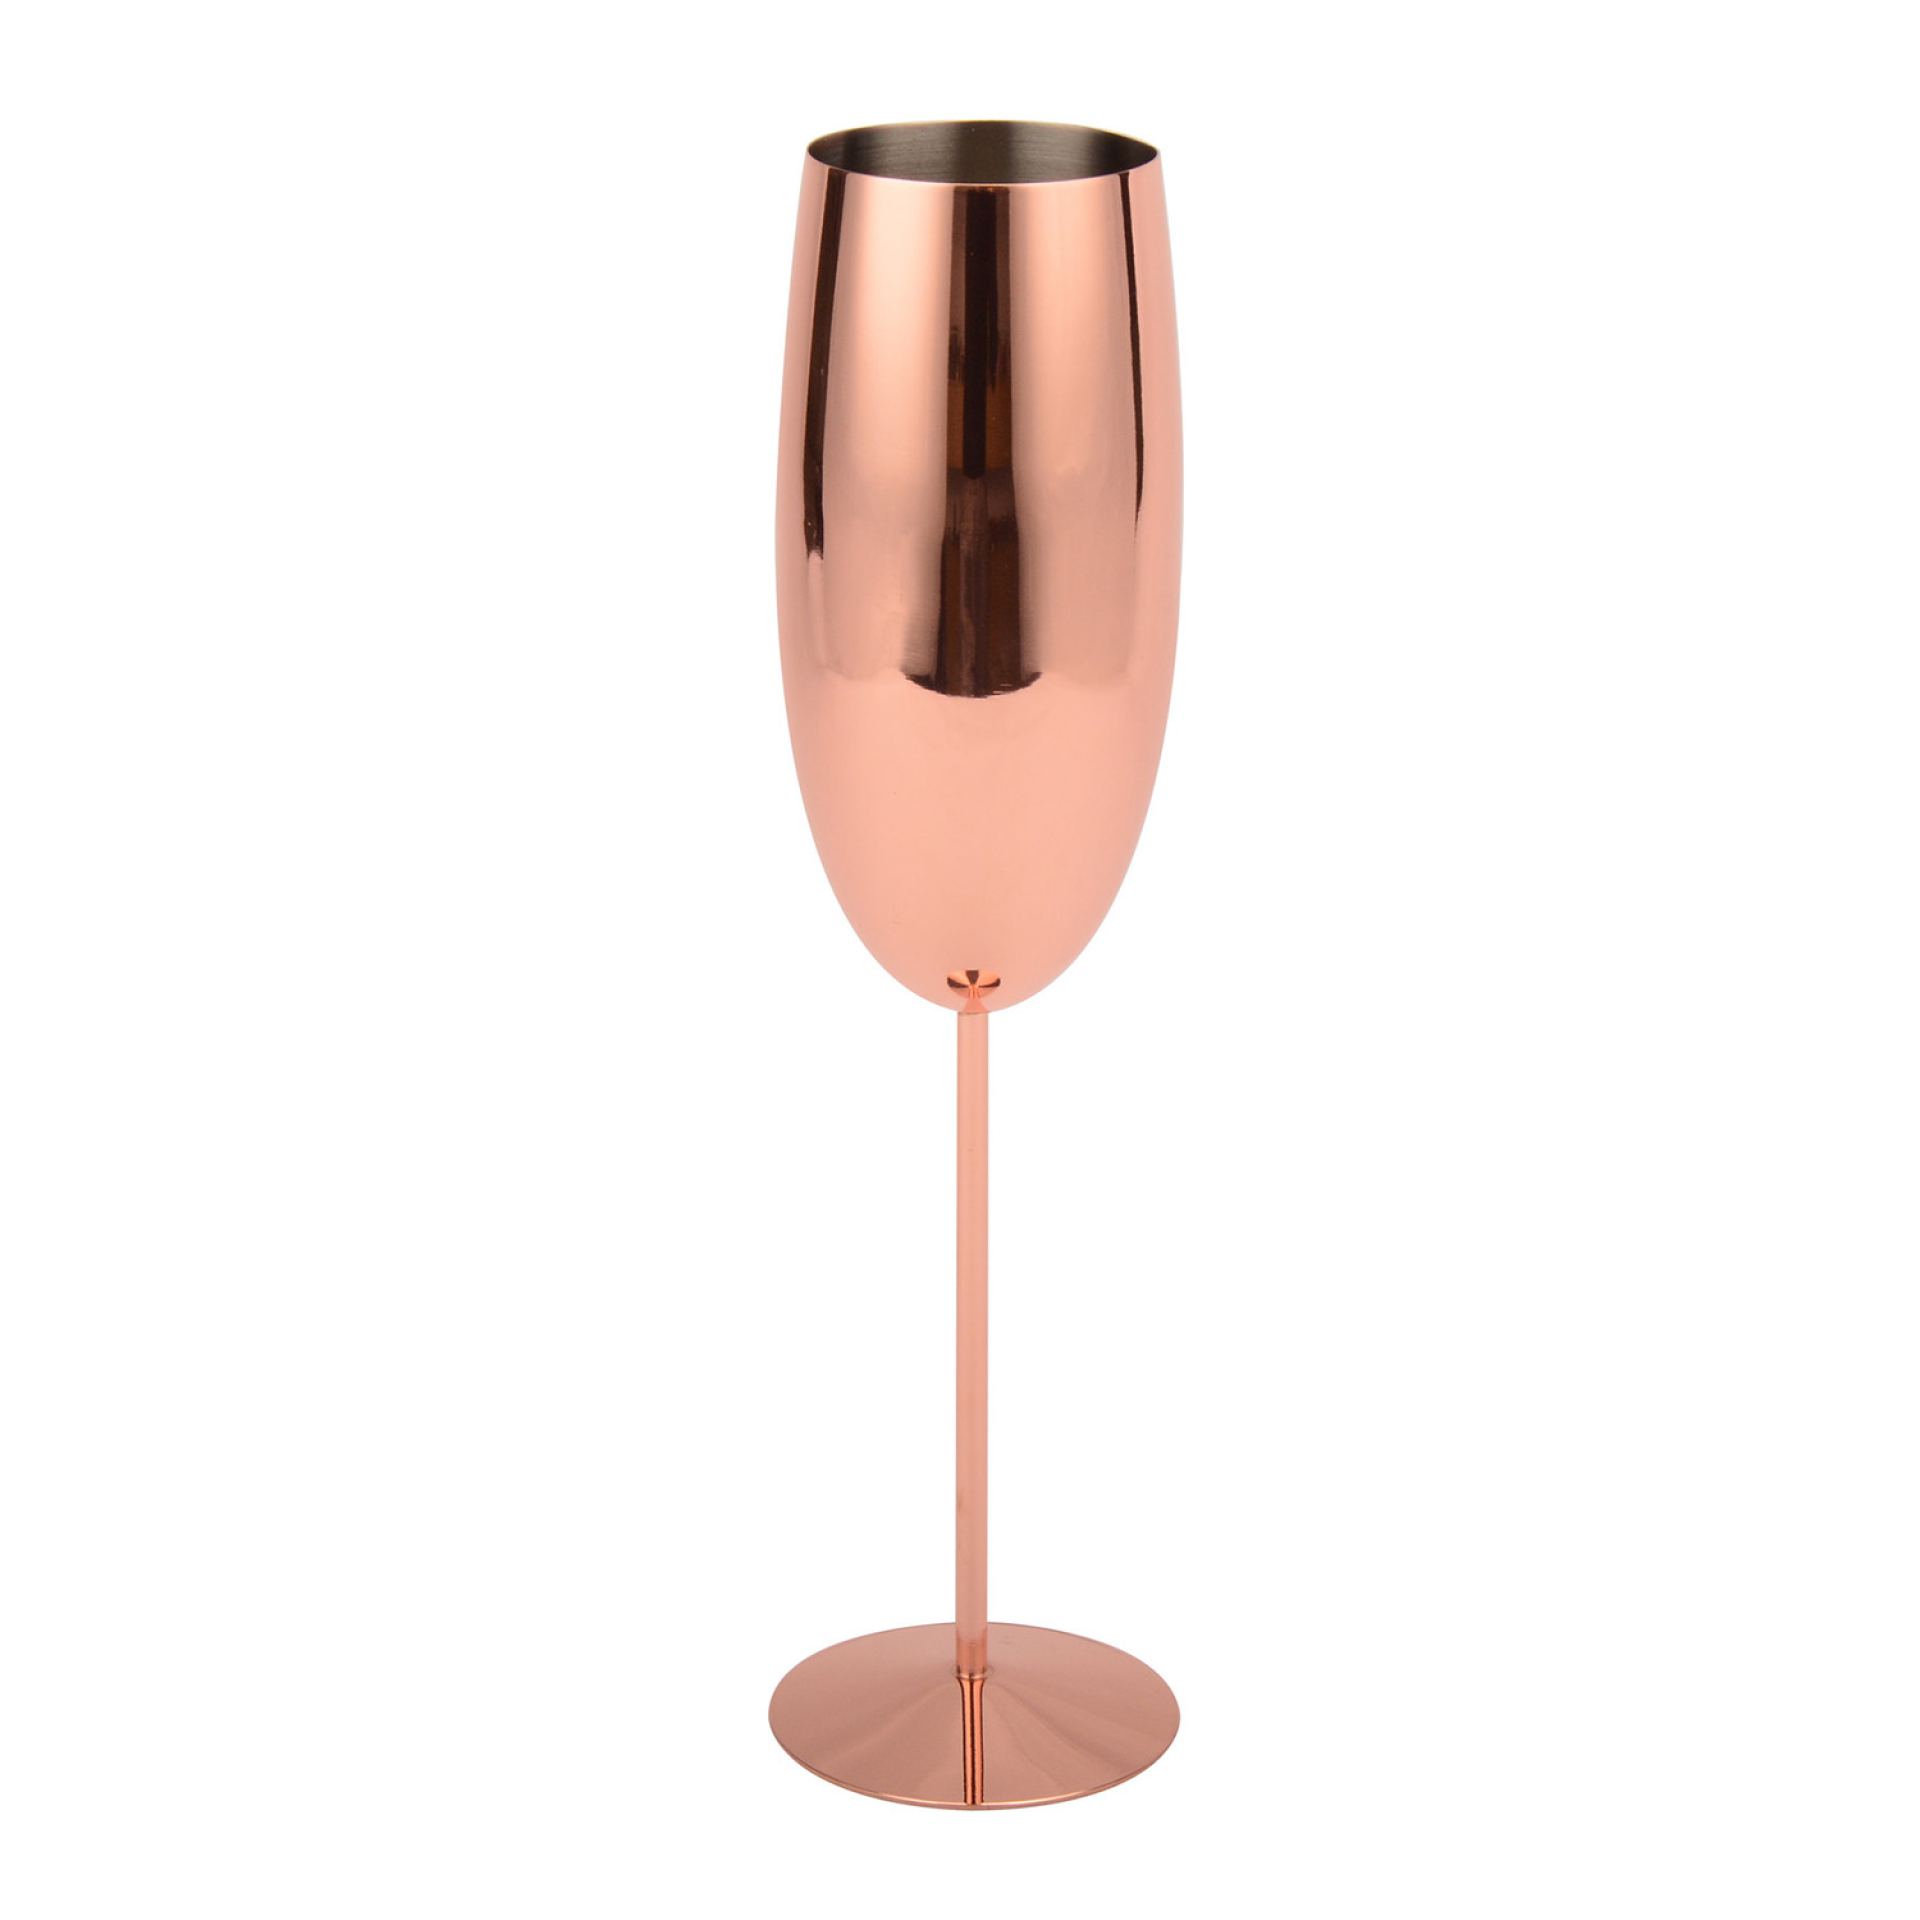 Fjesta RVS champagneglazen 28cl Rosé goud